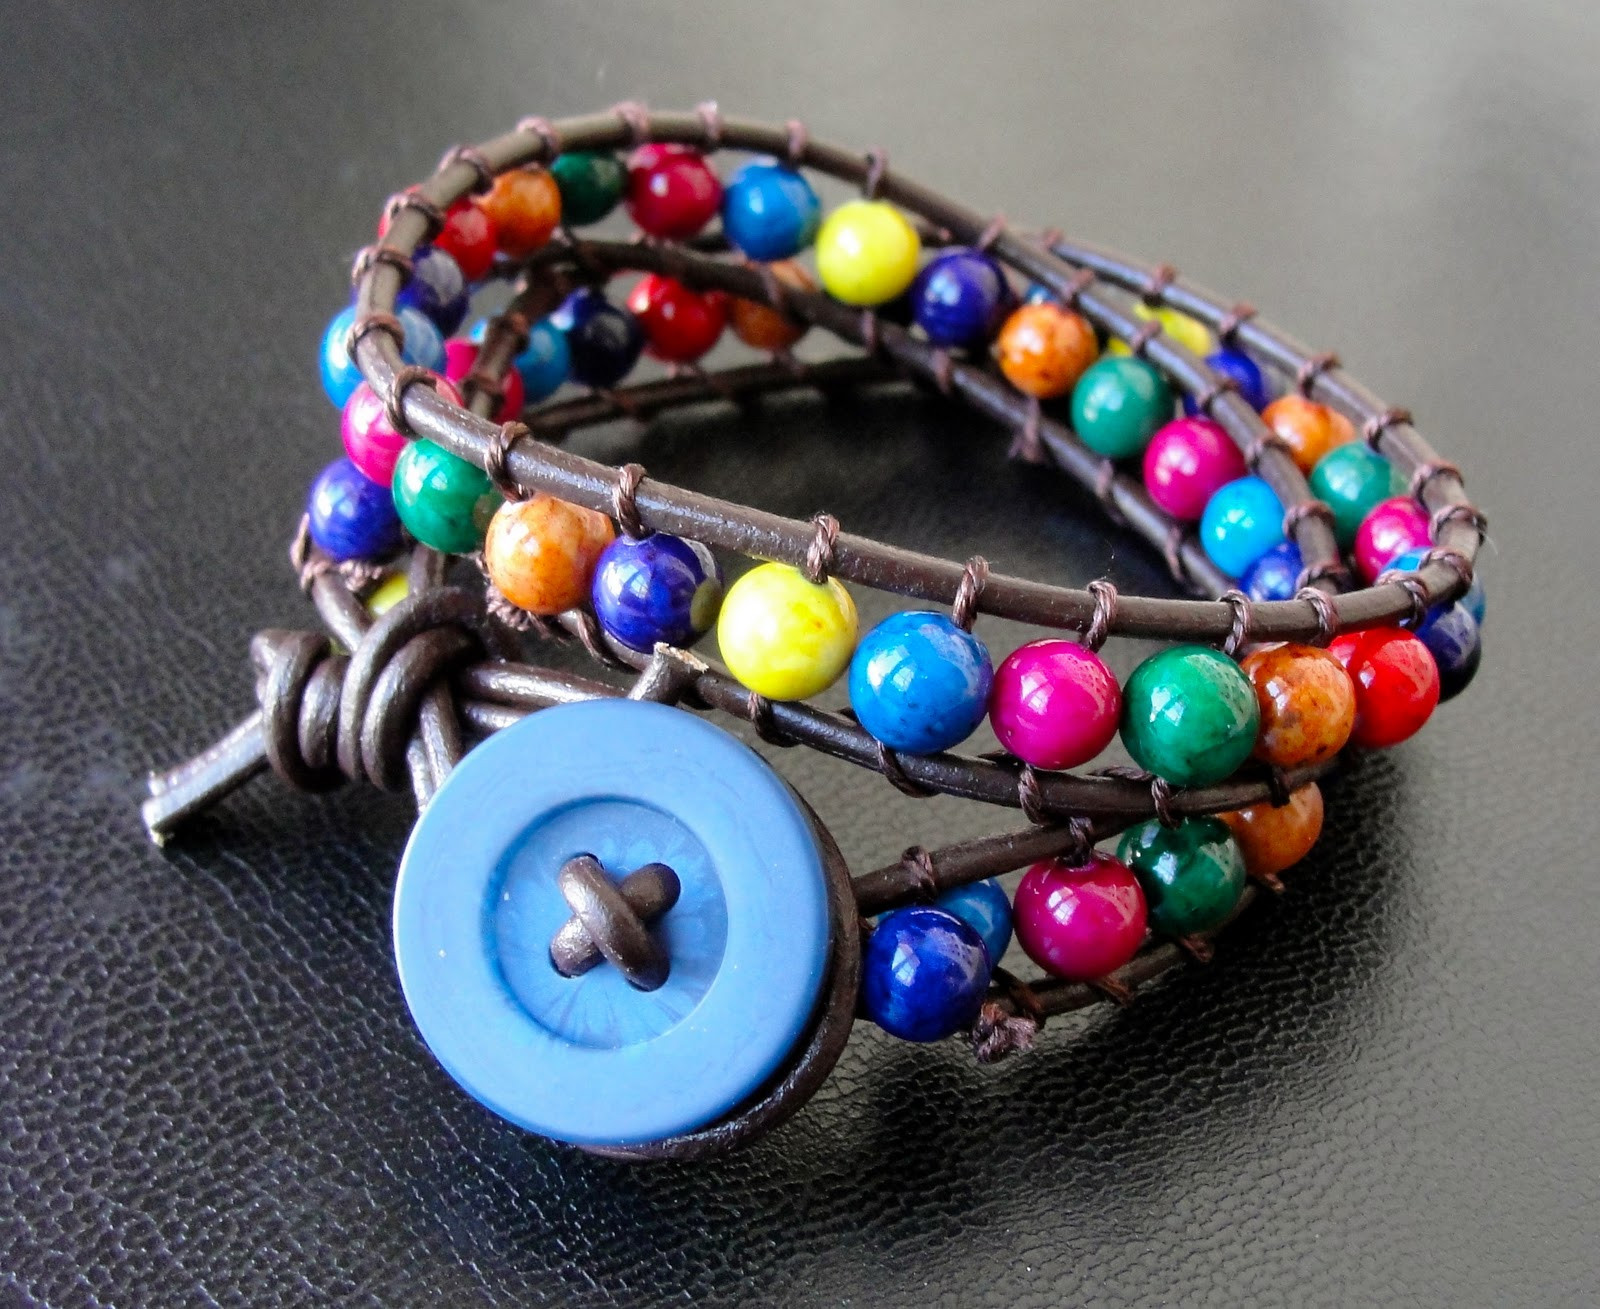 Best ideas about DIY Wrap Bracelet
. Save or Pin DIY Leather Beaded Wrap Bracelet Grace and Good Eats Now.